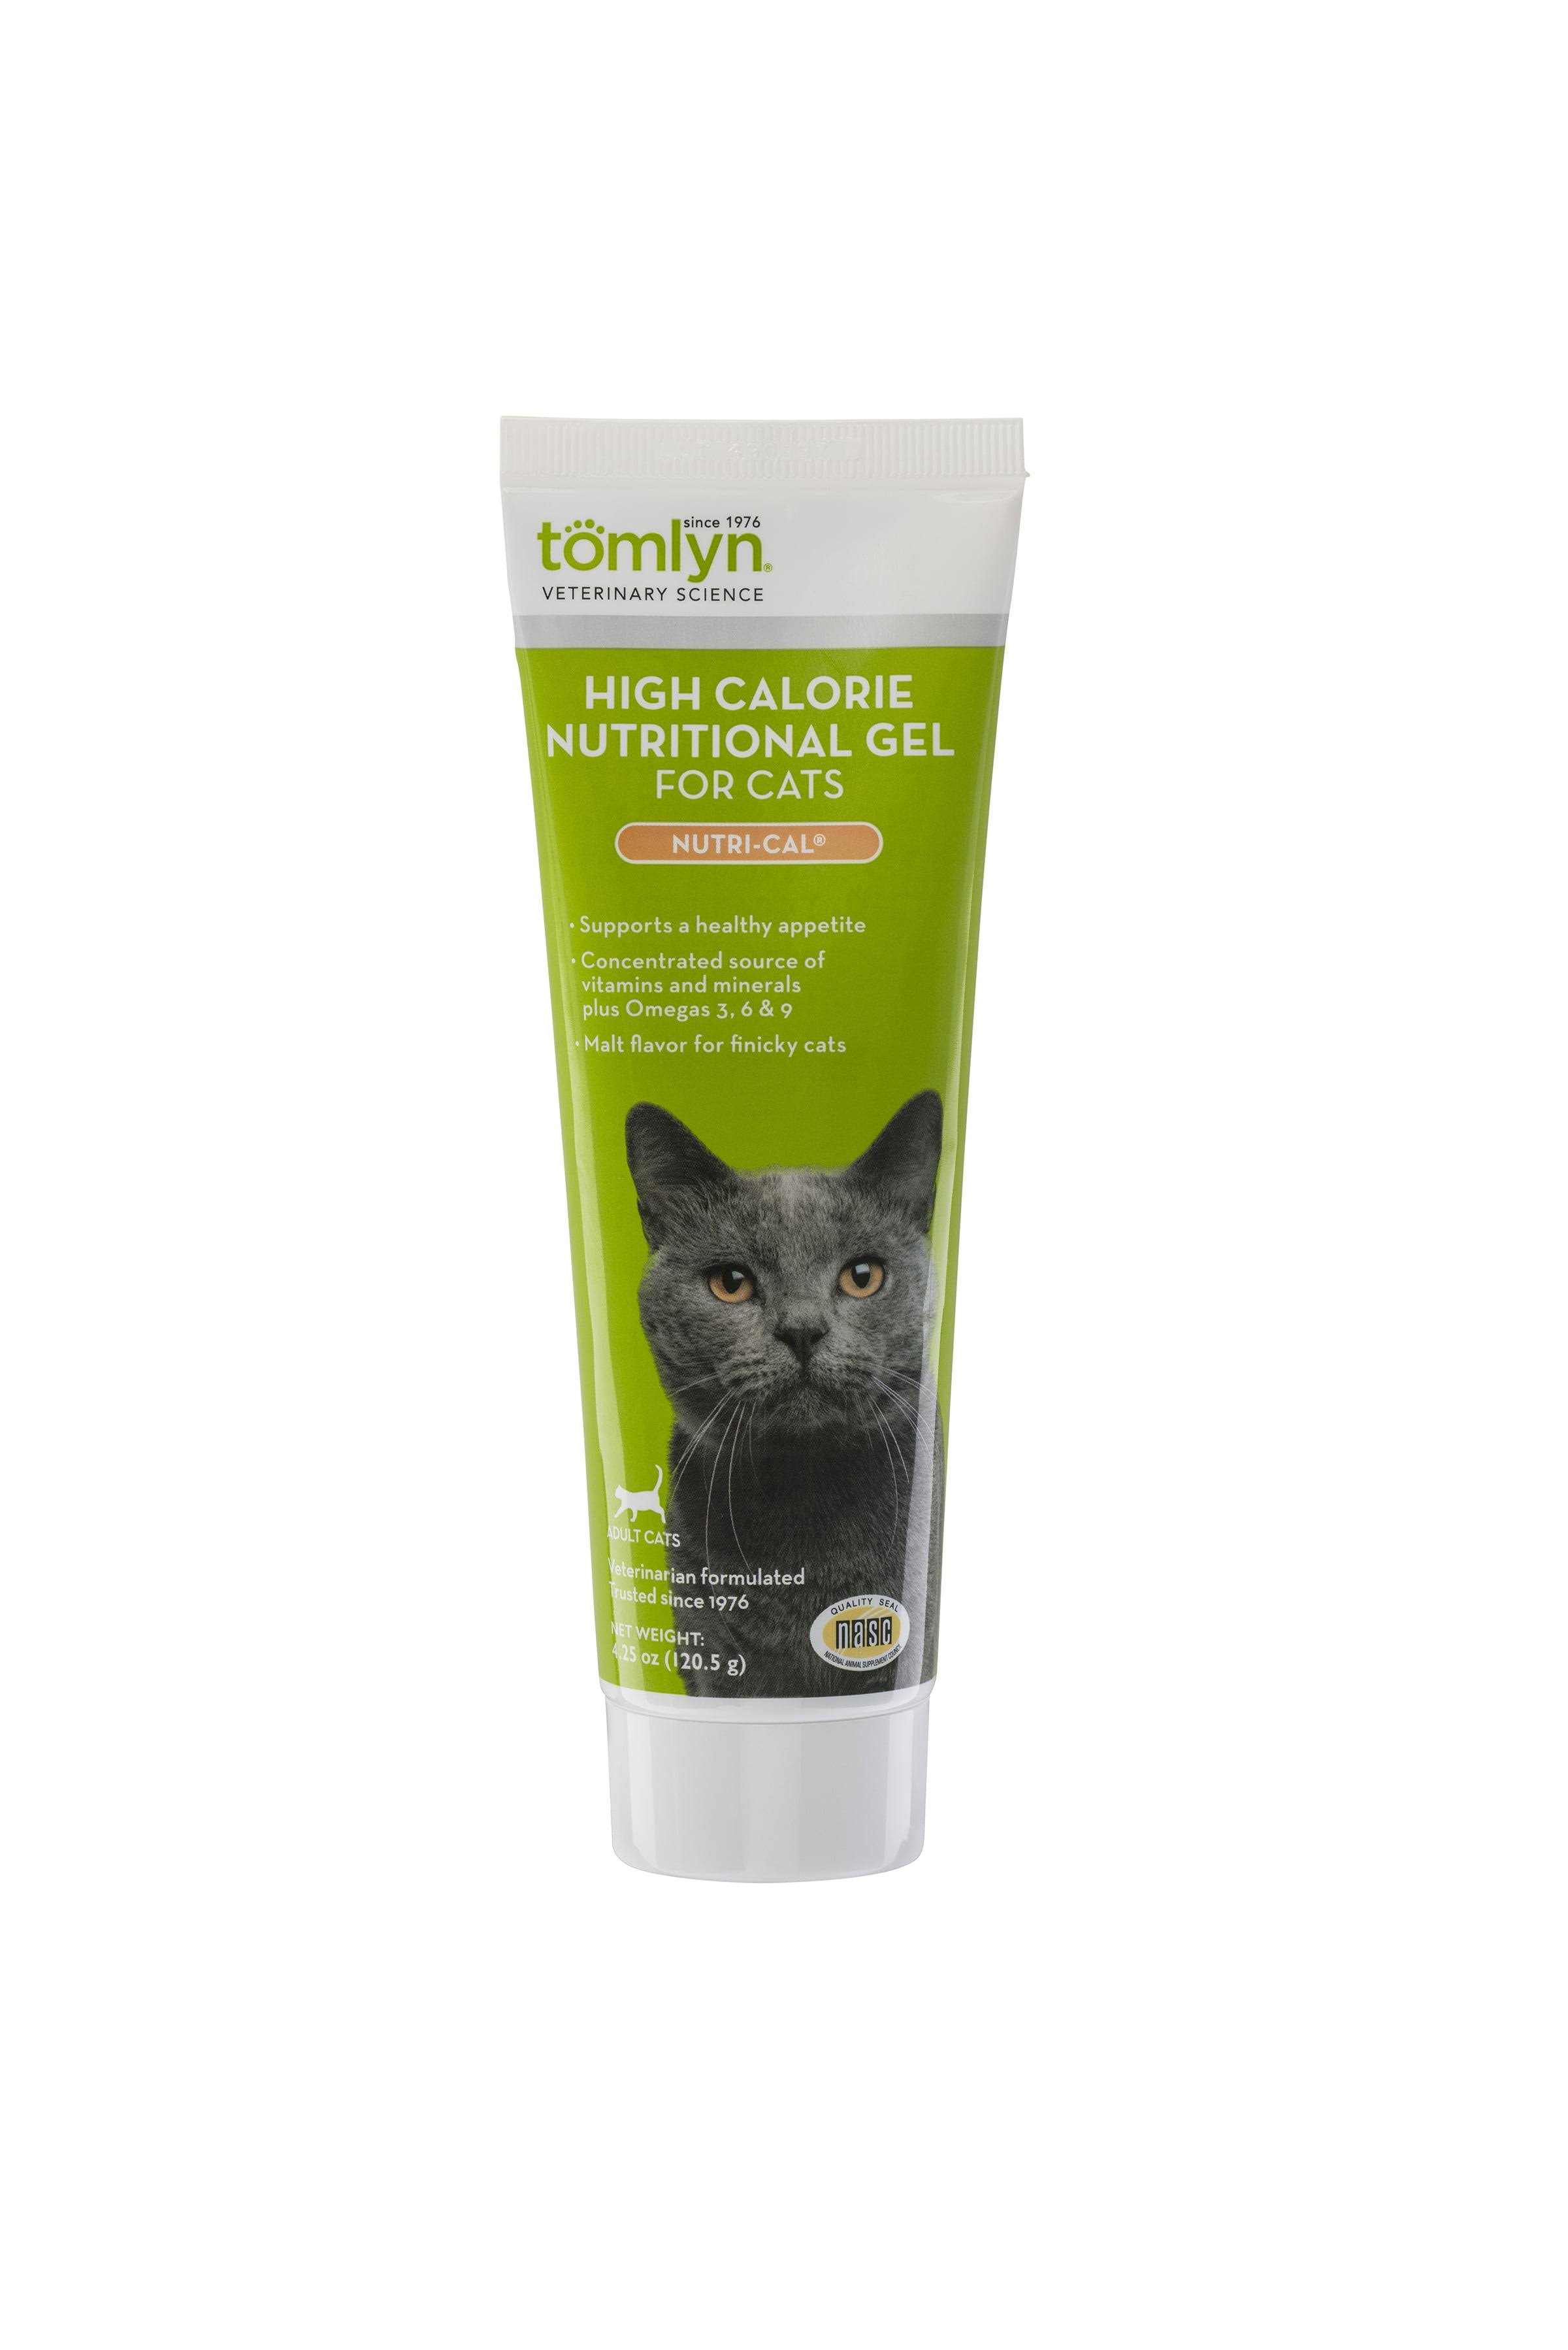 Tomlyn Nutri-Cal Cat Supplement